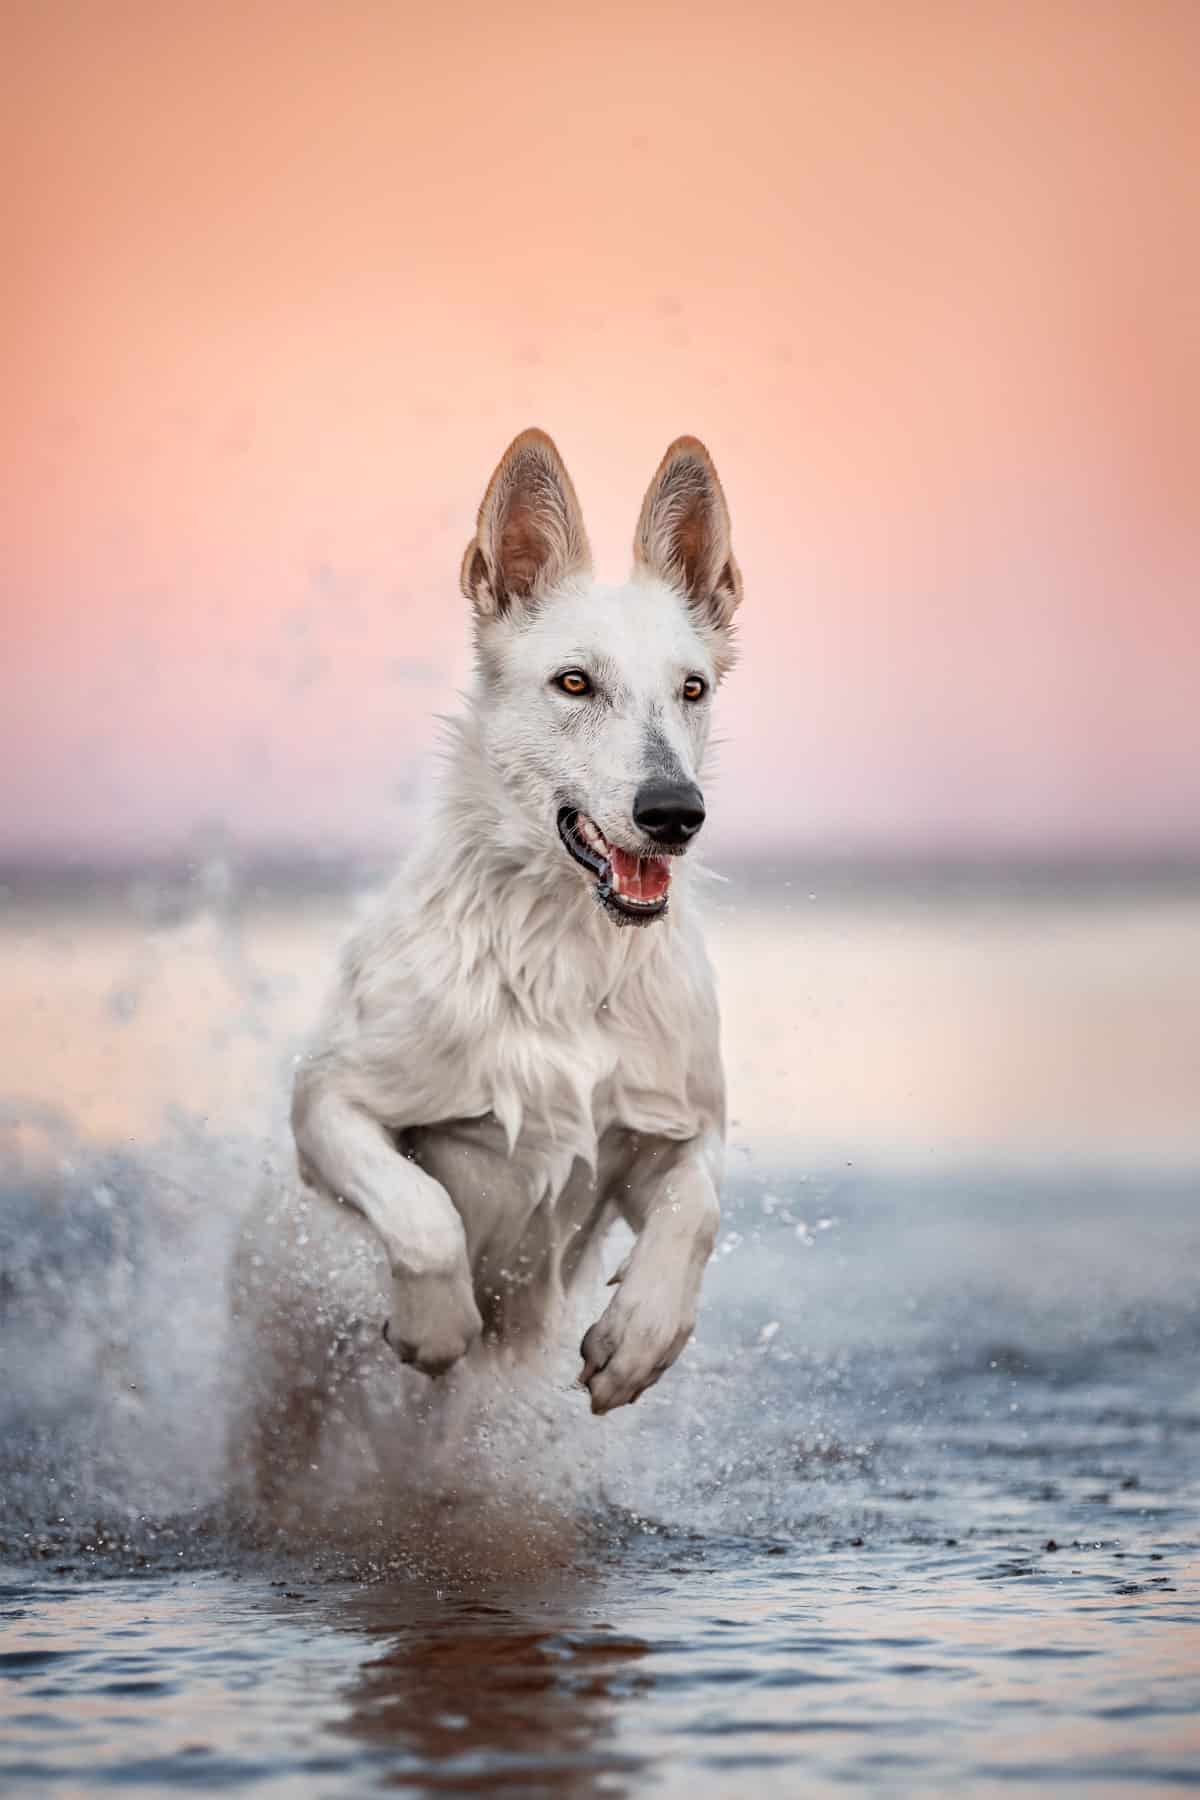 White dog running through water